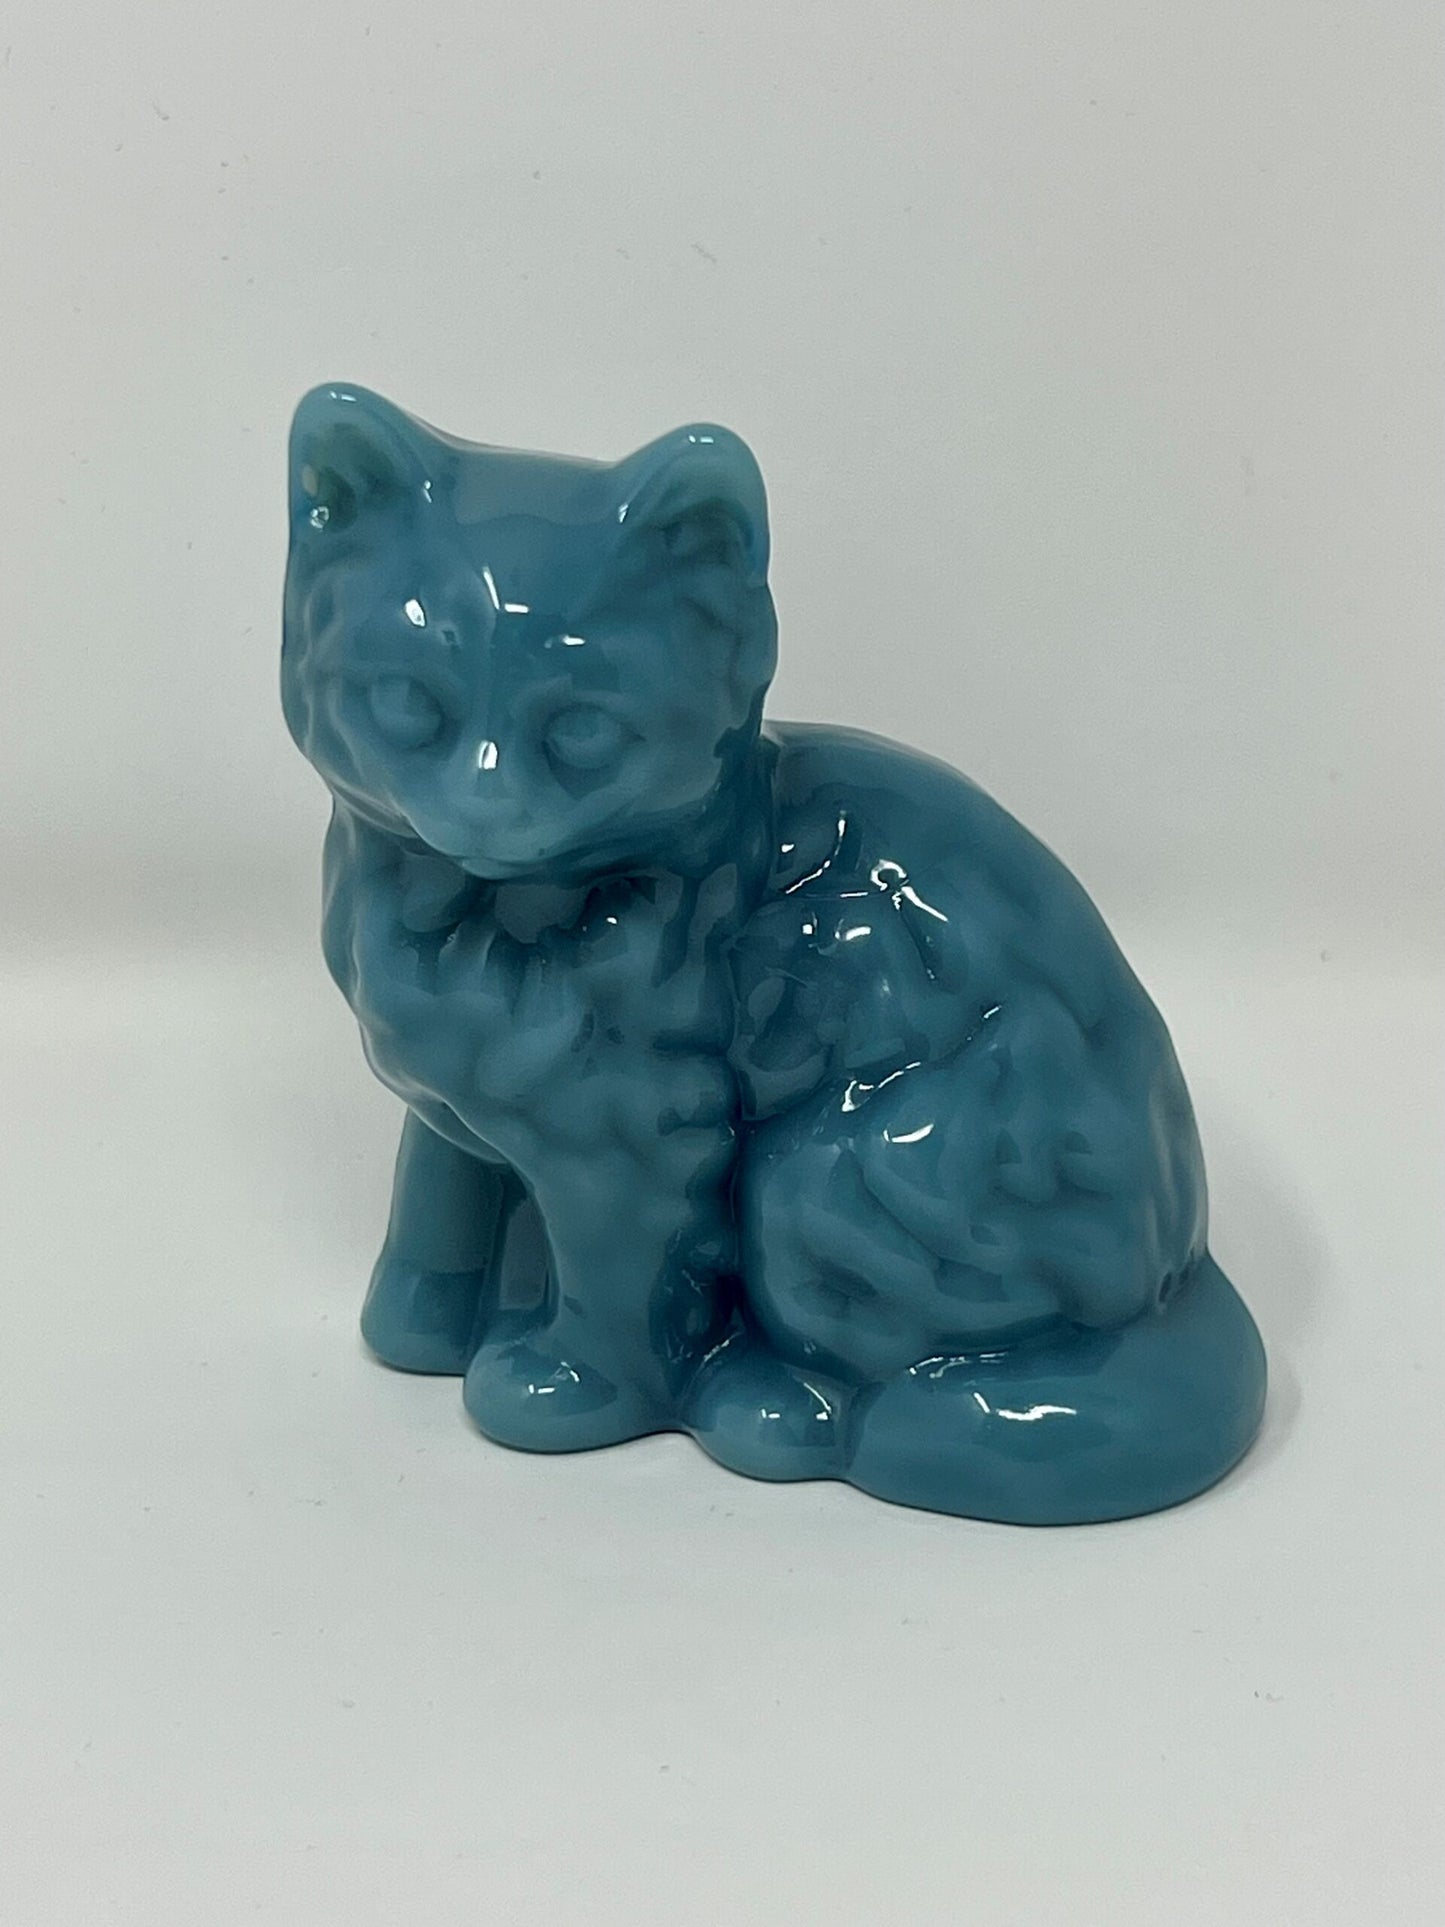 Mosser Kitty Figurine